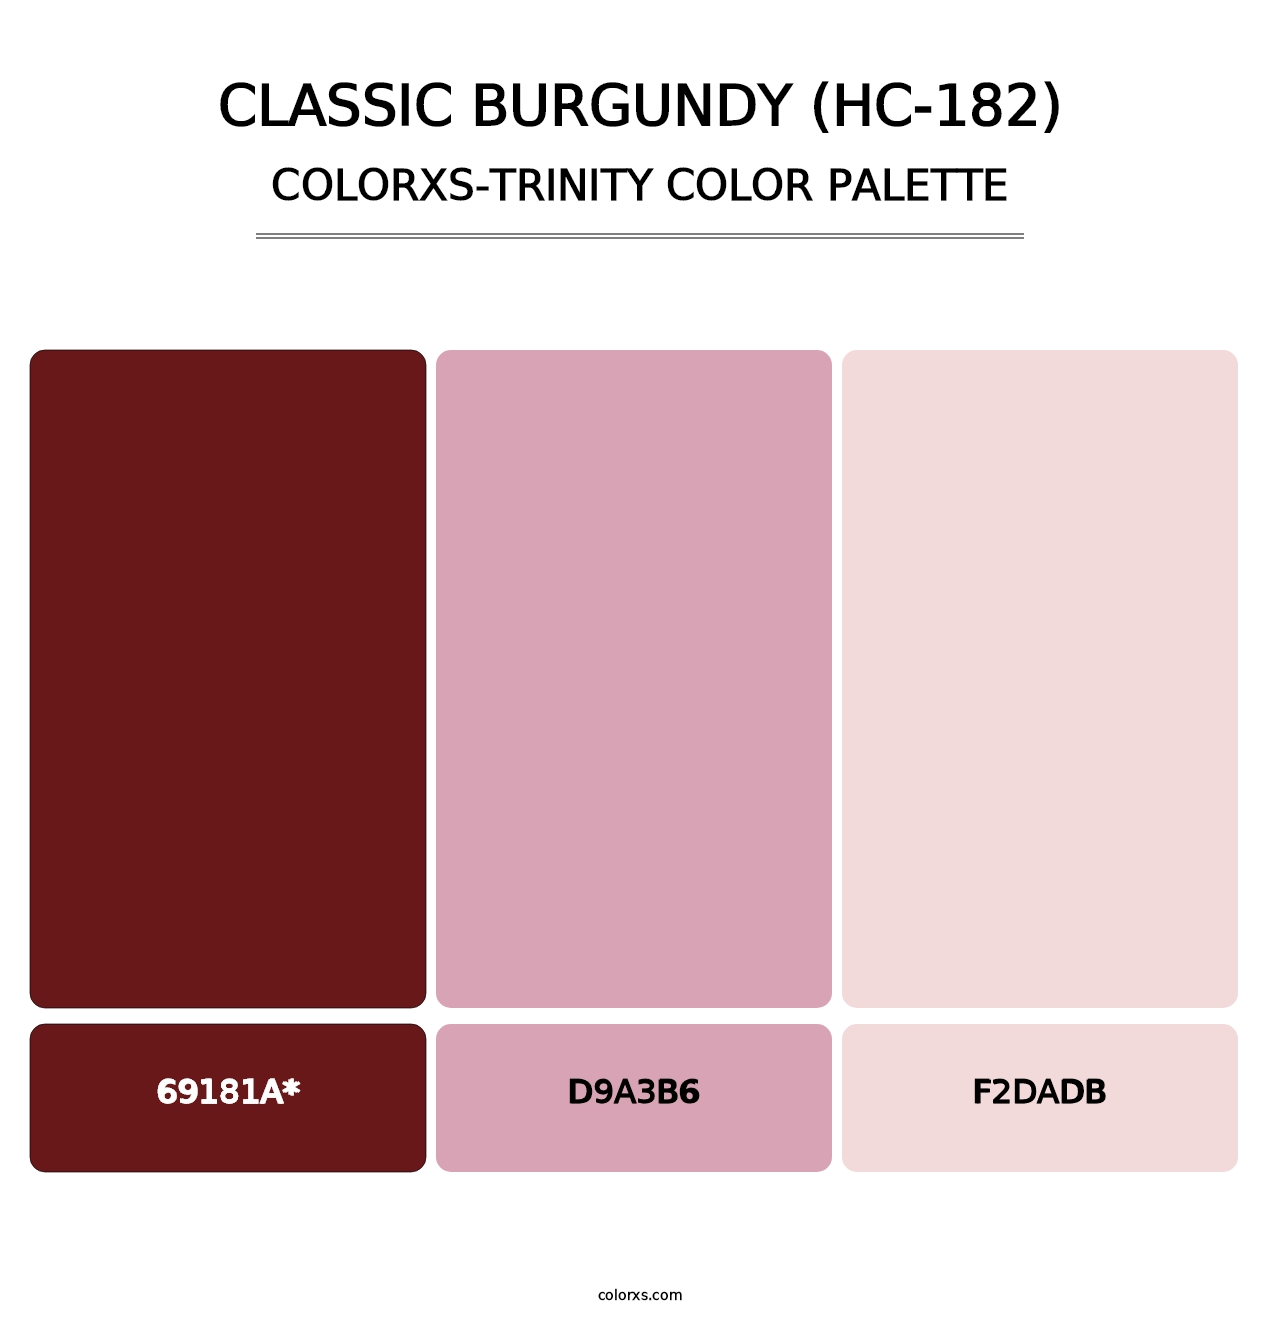 Classic Burgundy (HC-182) - Colorxs Trinity Palette